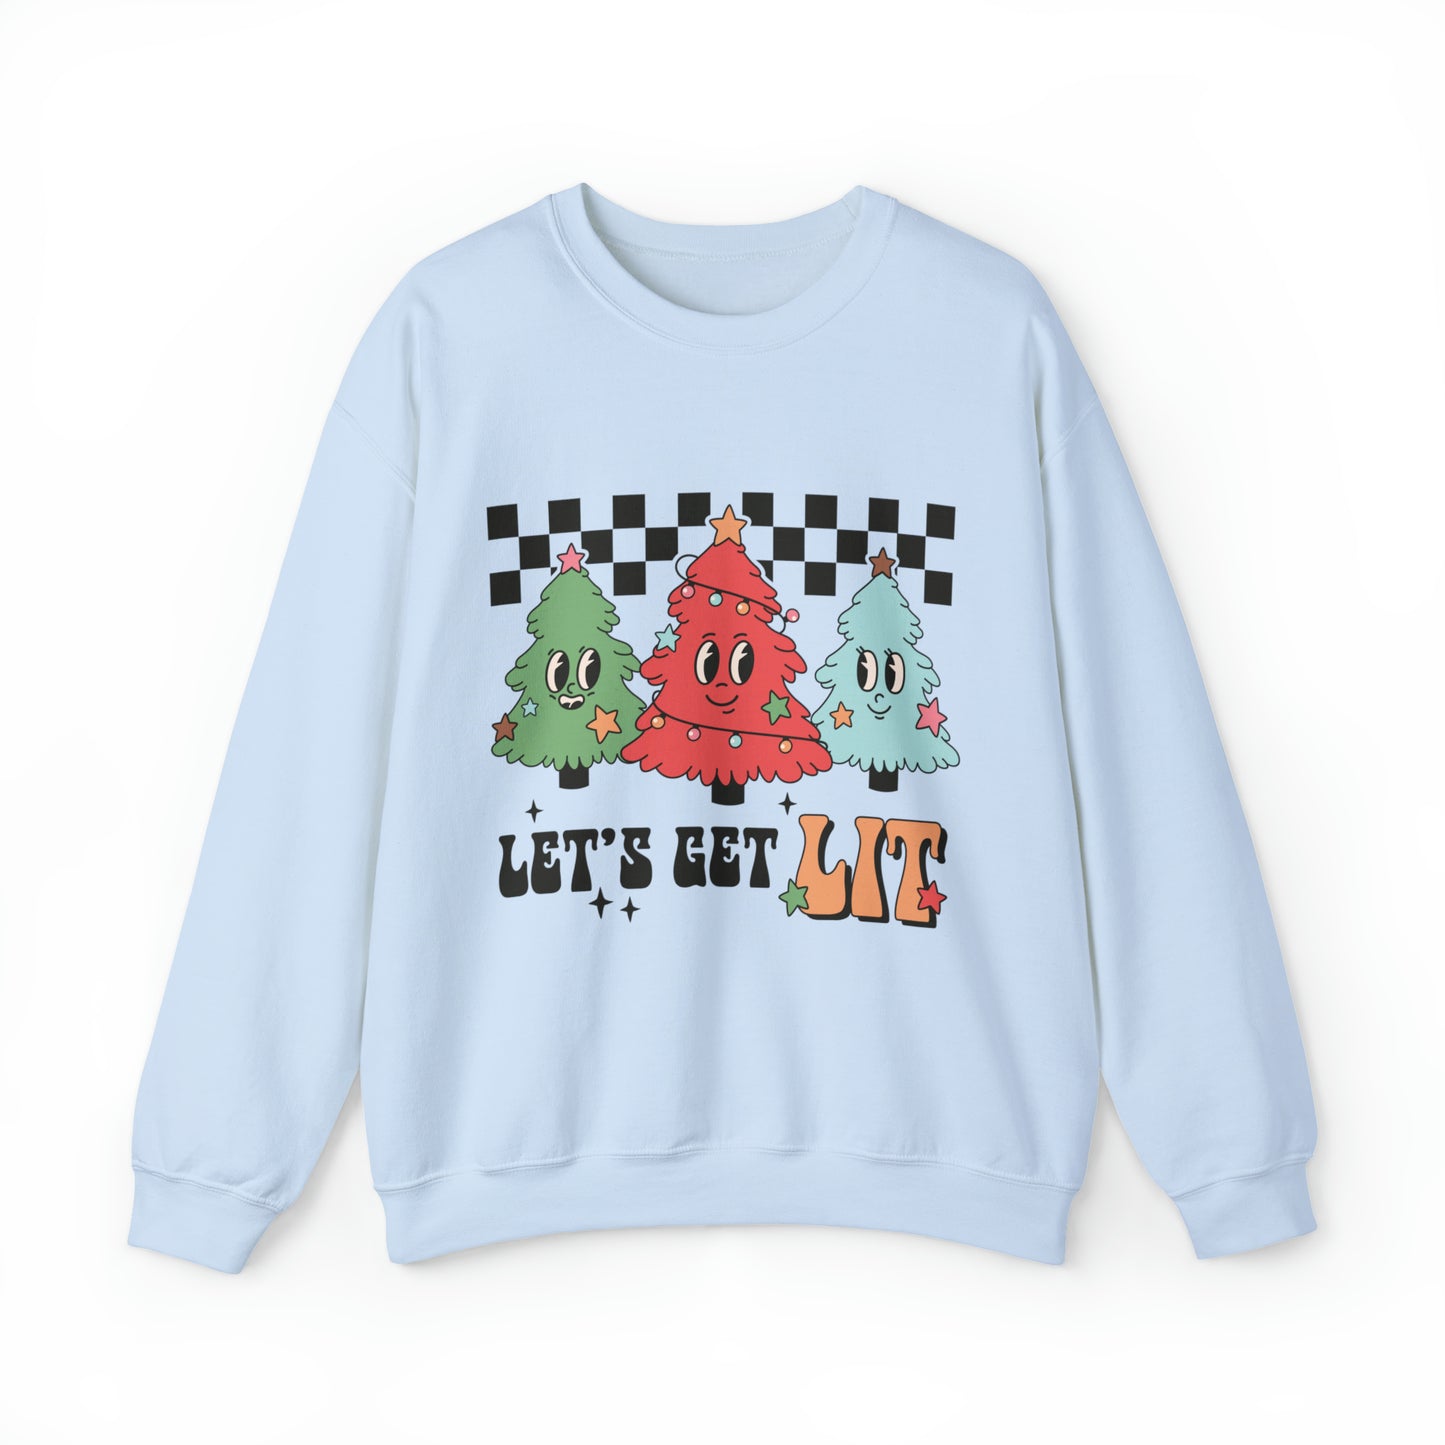 Let's get lit Christmas Tree Funny Adult Crewneck Sweatshirt